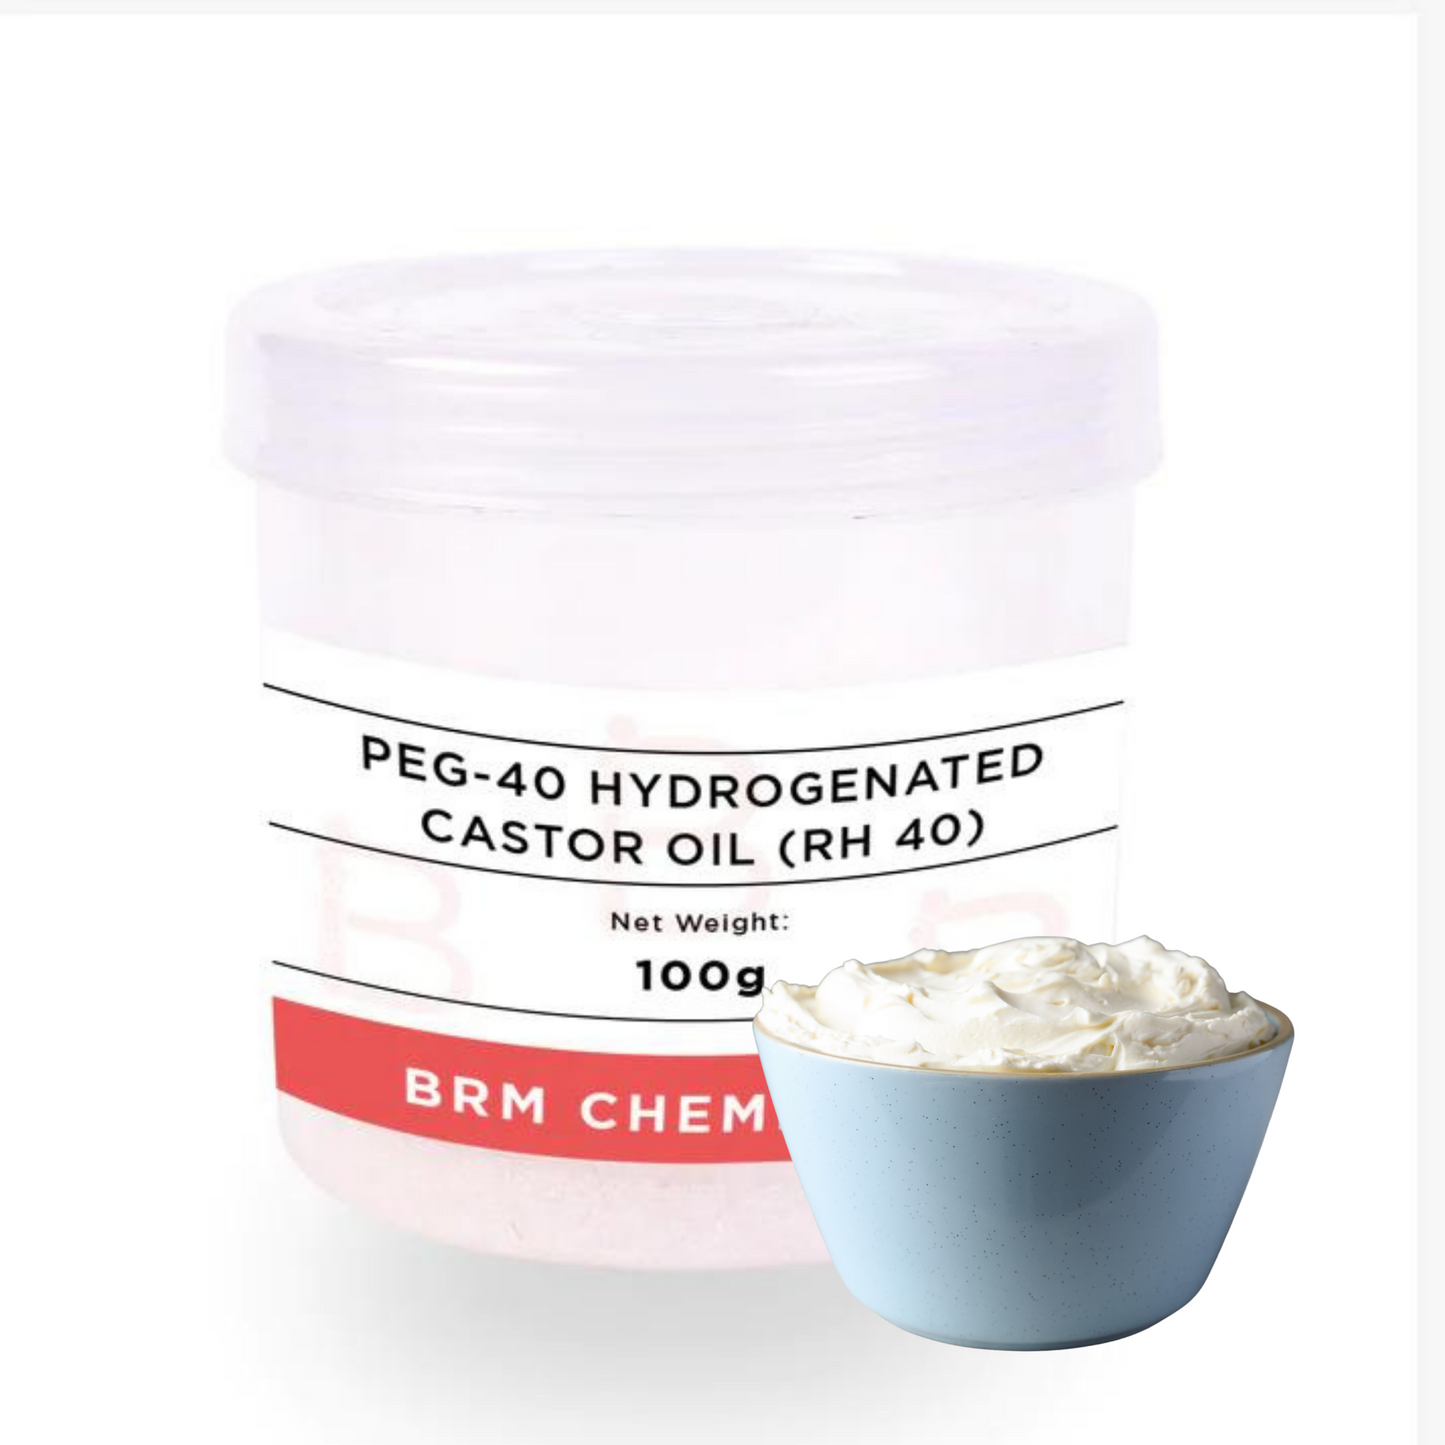 Peg - 40 Hydrogenated Castor Oil (RH 40)